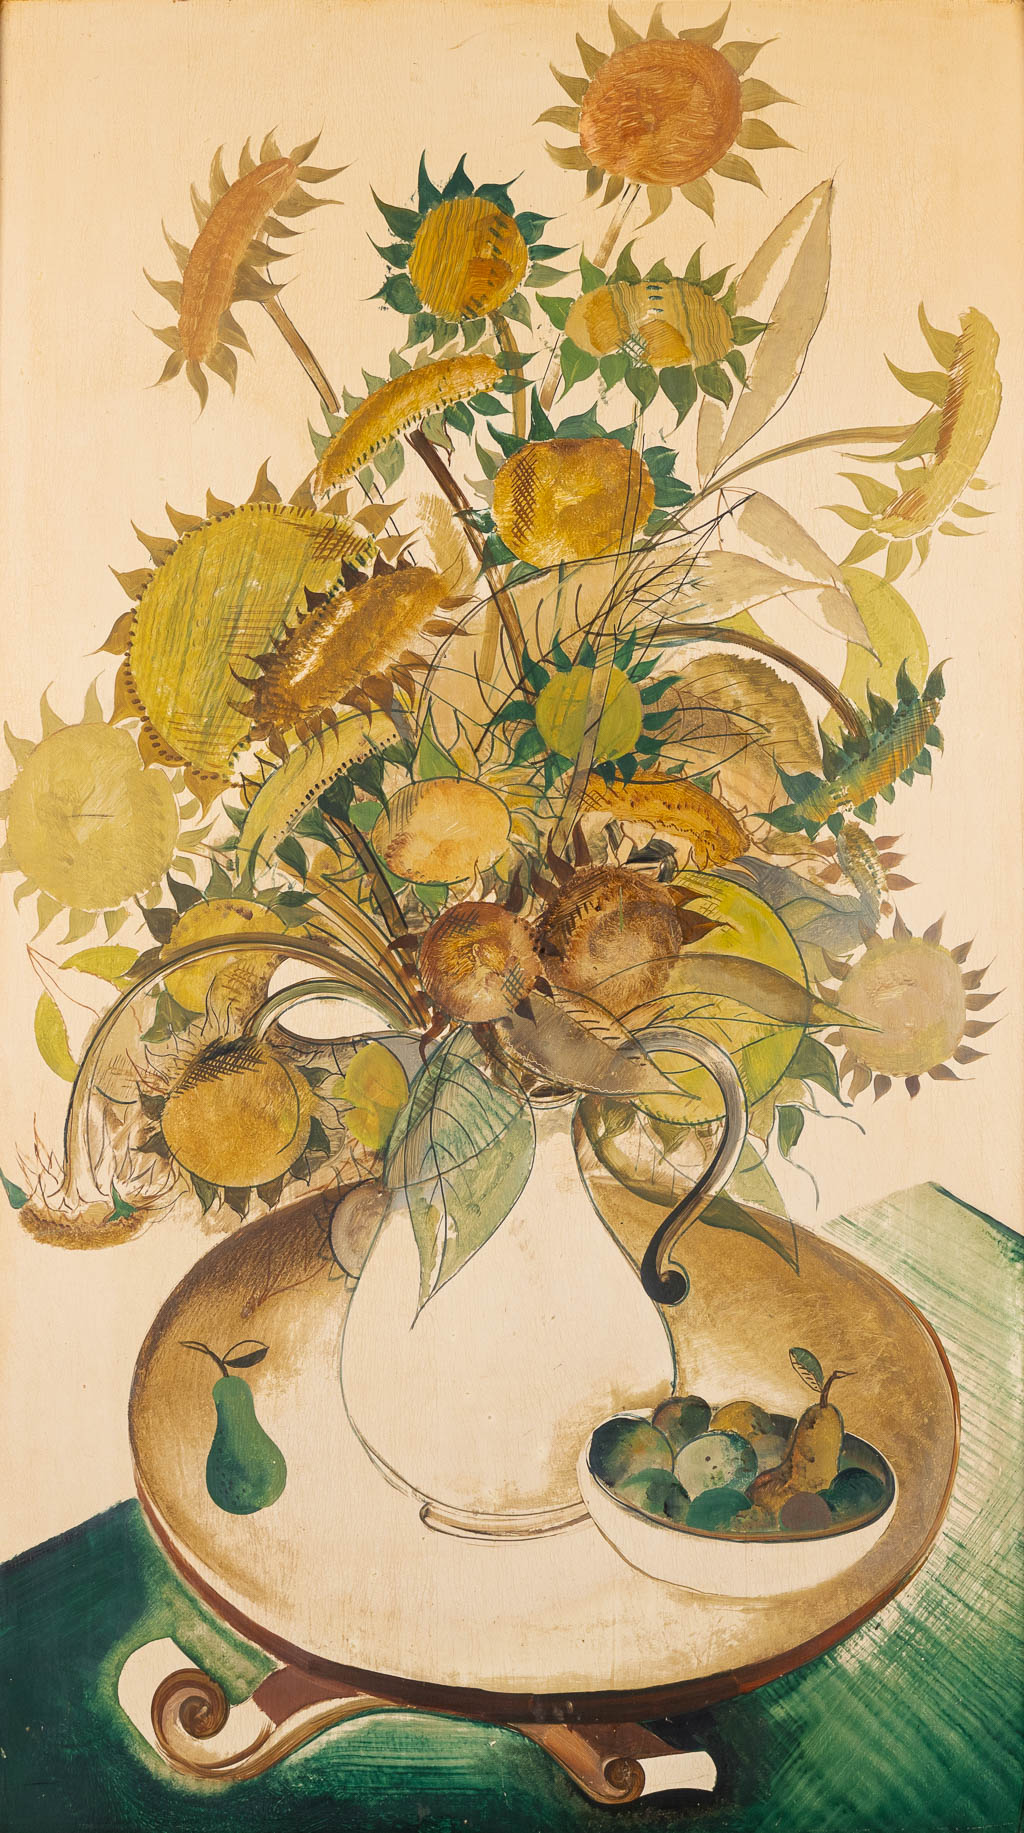  Albert SAVERYS (1886-1964) 'Sunflowers' 